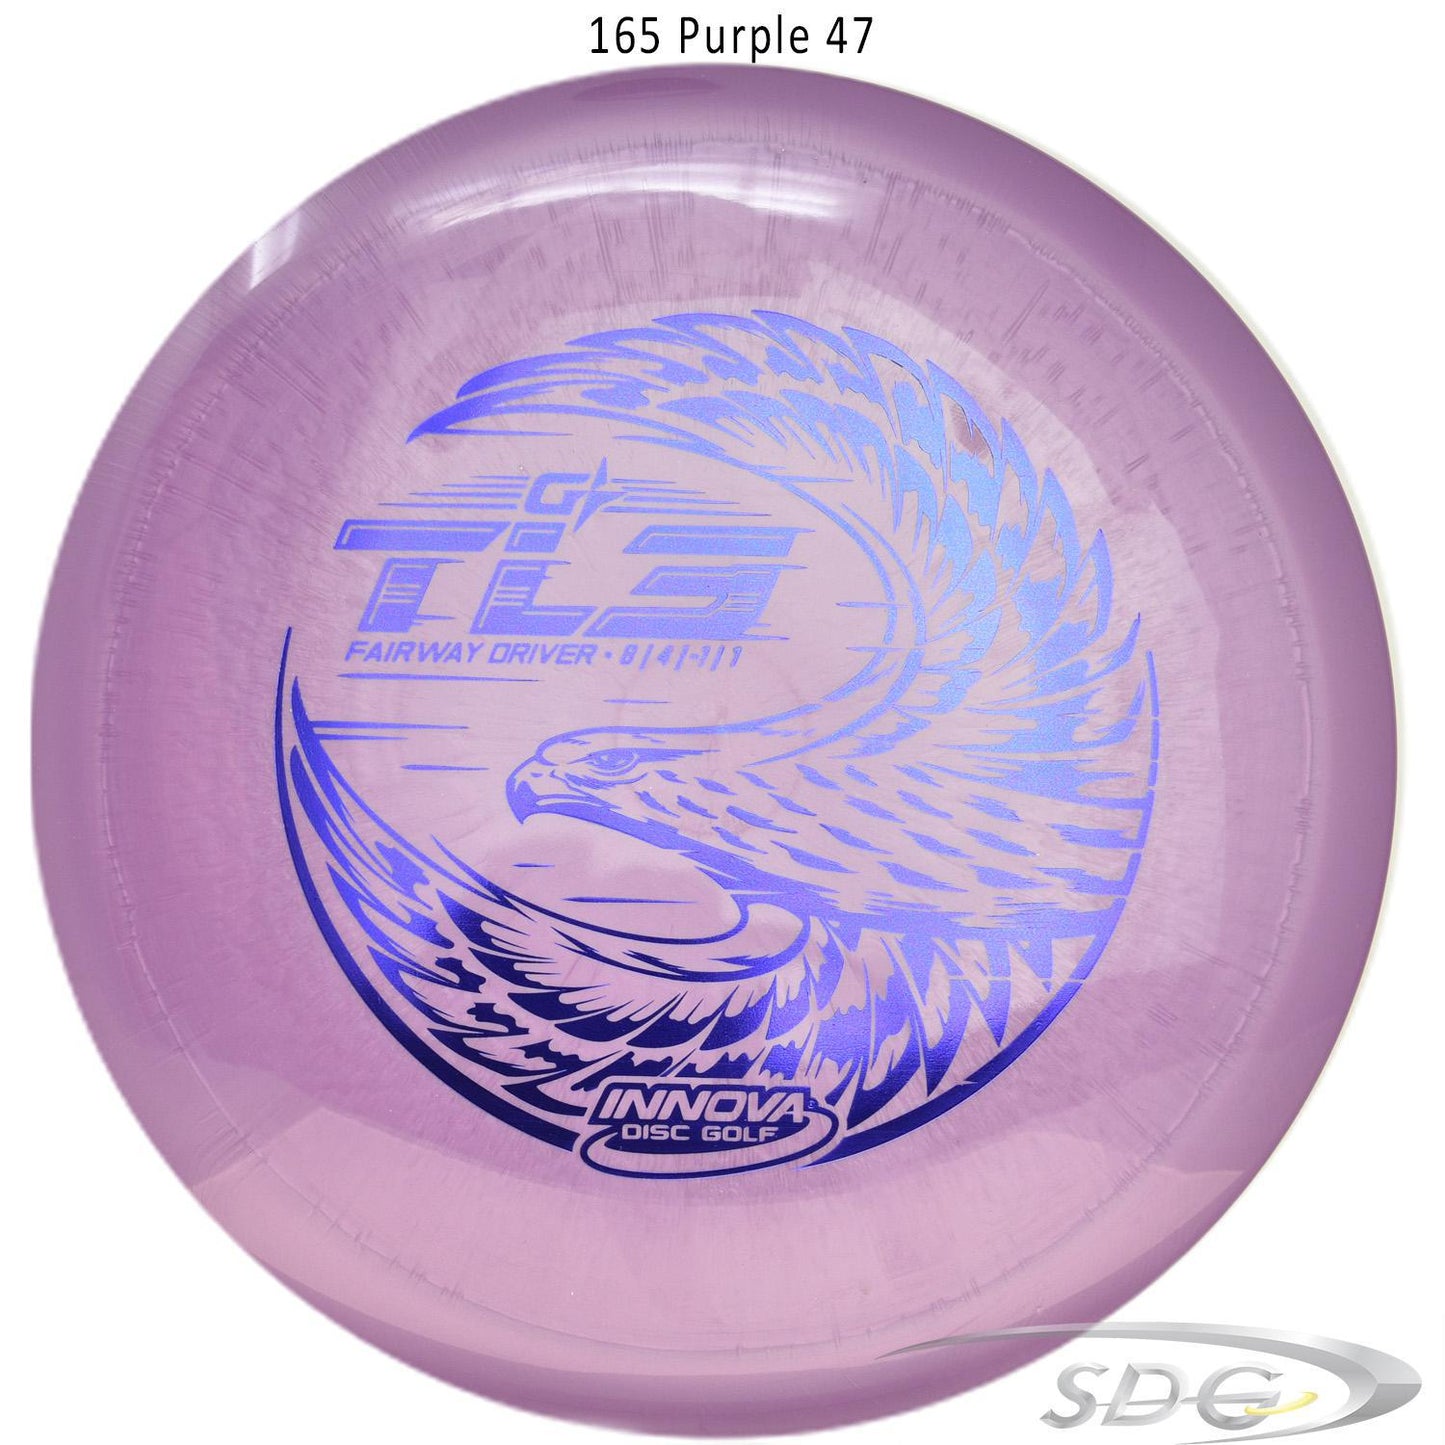 innova-gstar-tl3-disc-golf-fairway-driver 165 Purple 47 